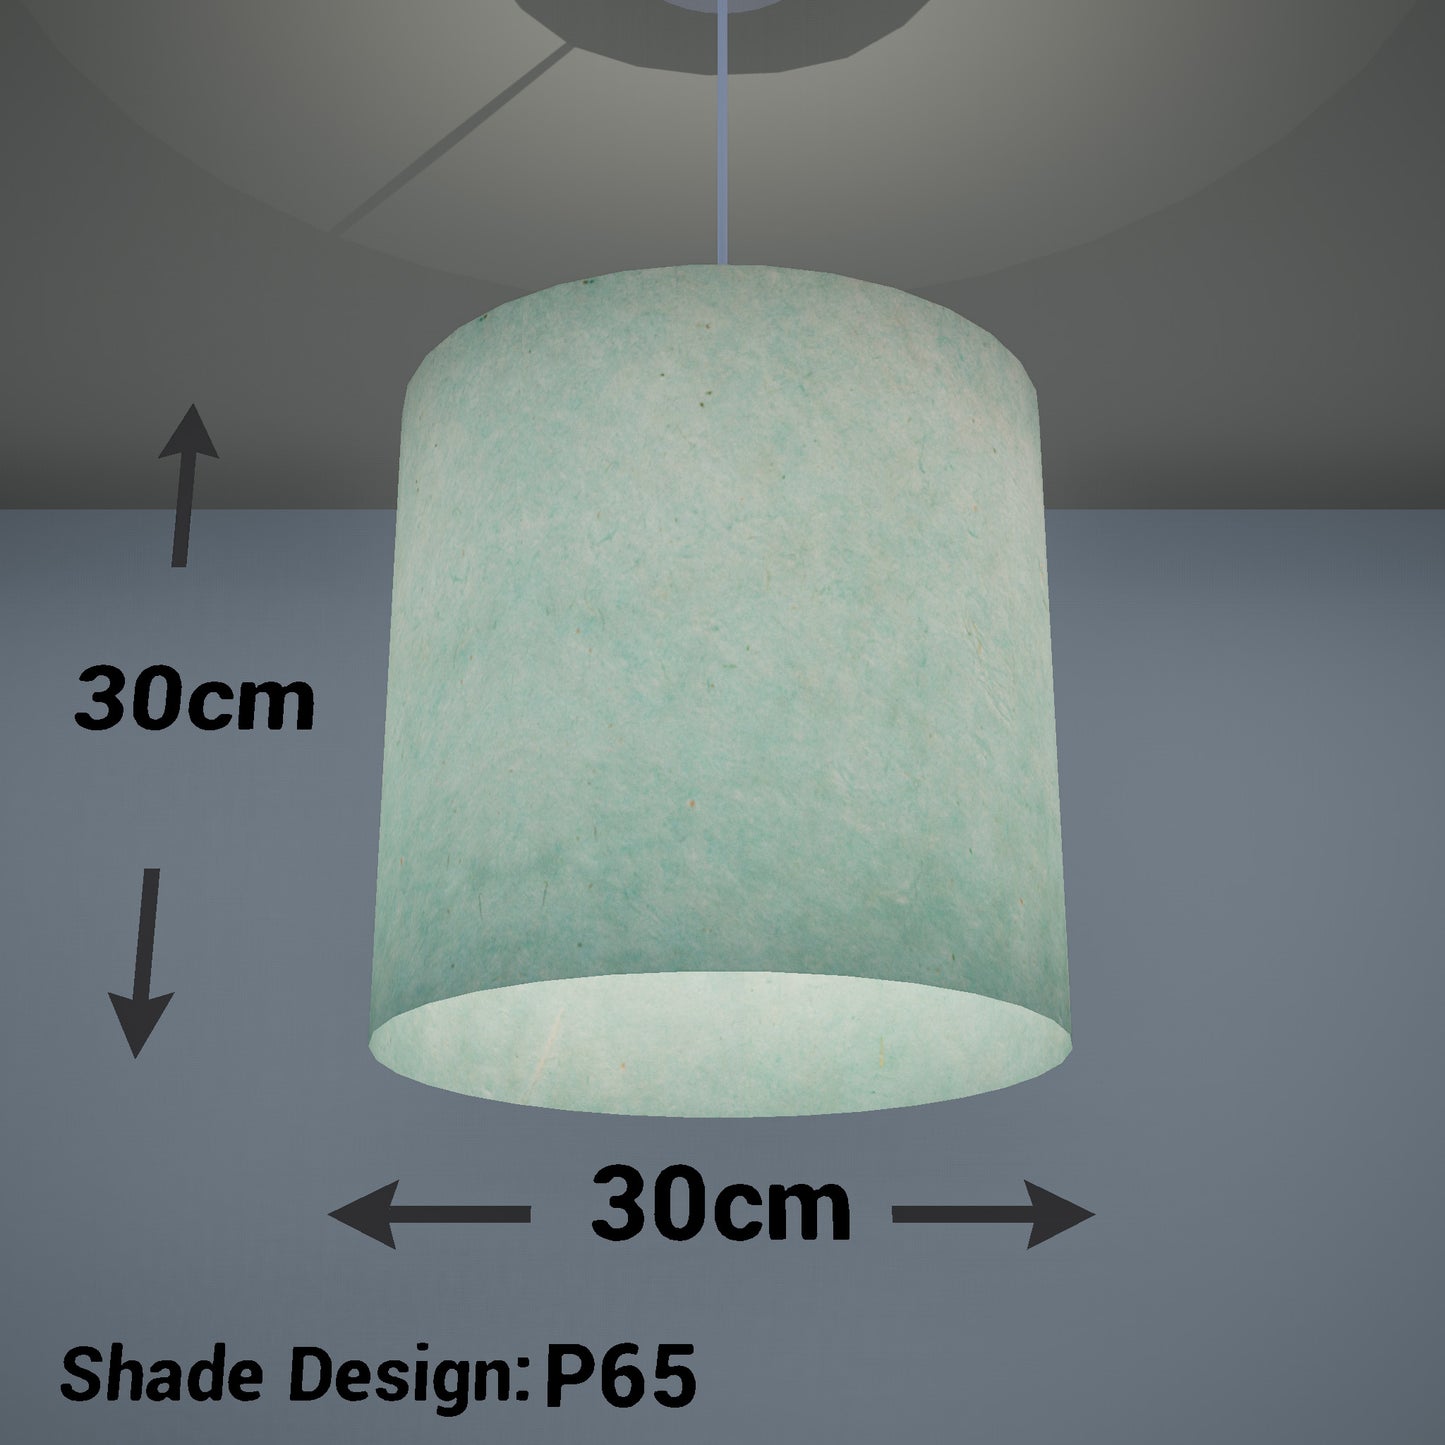 Drum Lamp Shade - P65 - Turquoise Lokta, 30cm(d) x 30cm(h)